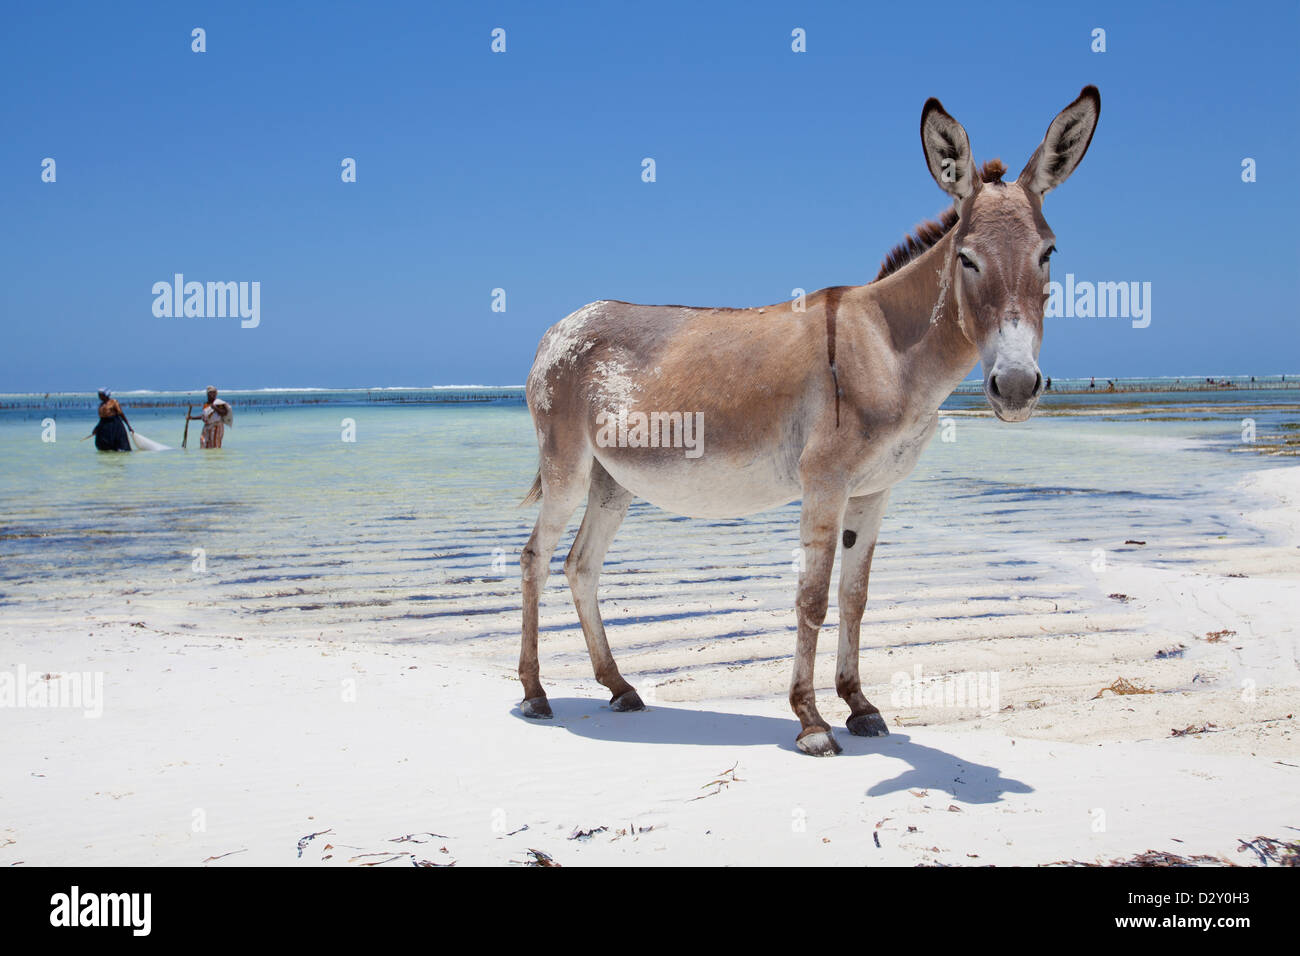 Donkey on a beach with two seaweed farmers walking by, Matemwe, Zanzibar. Stock Photo